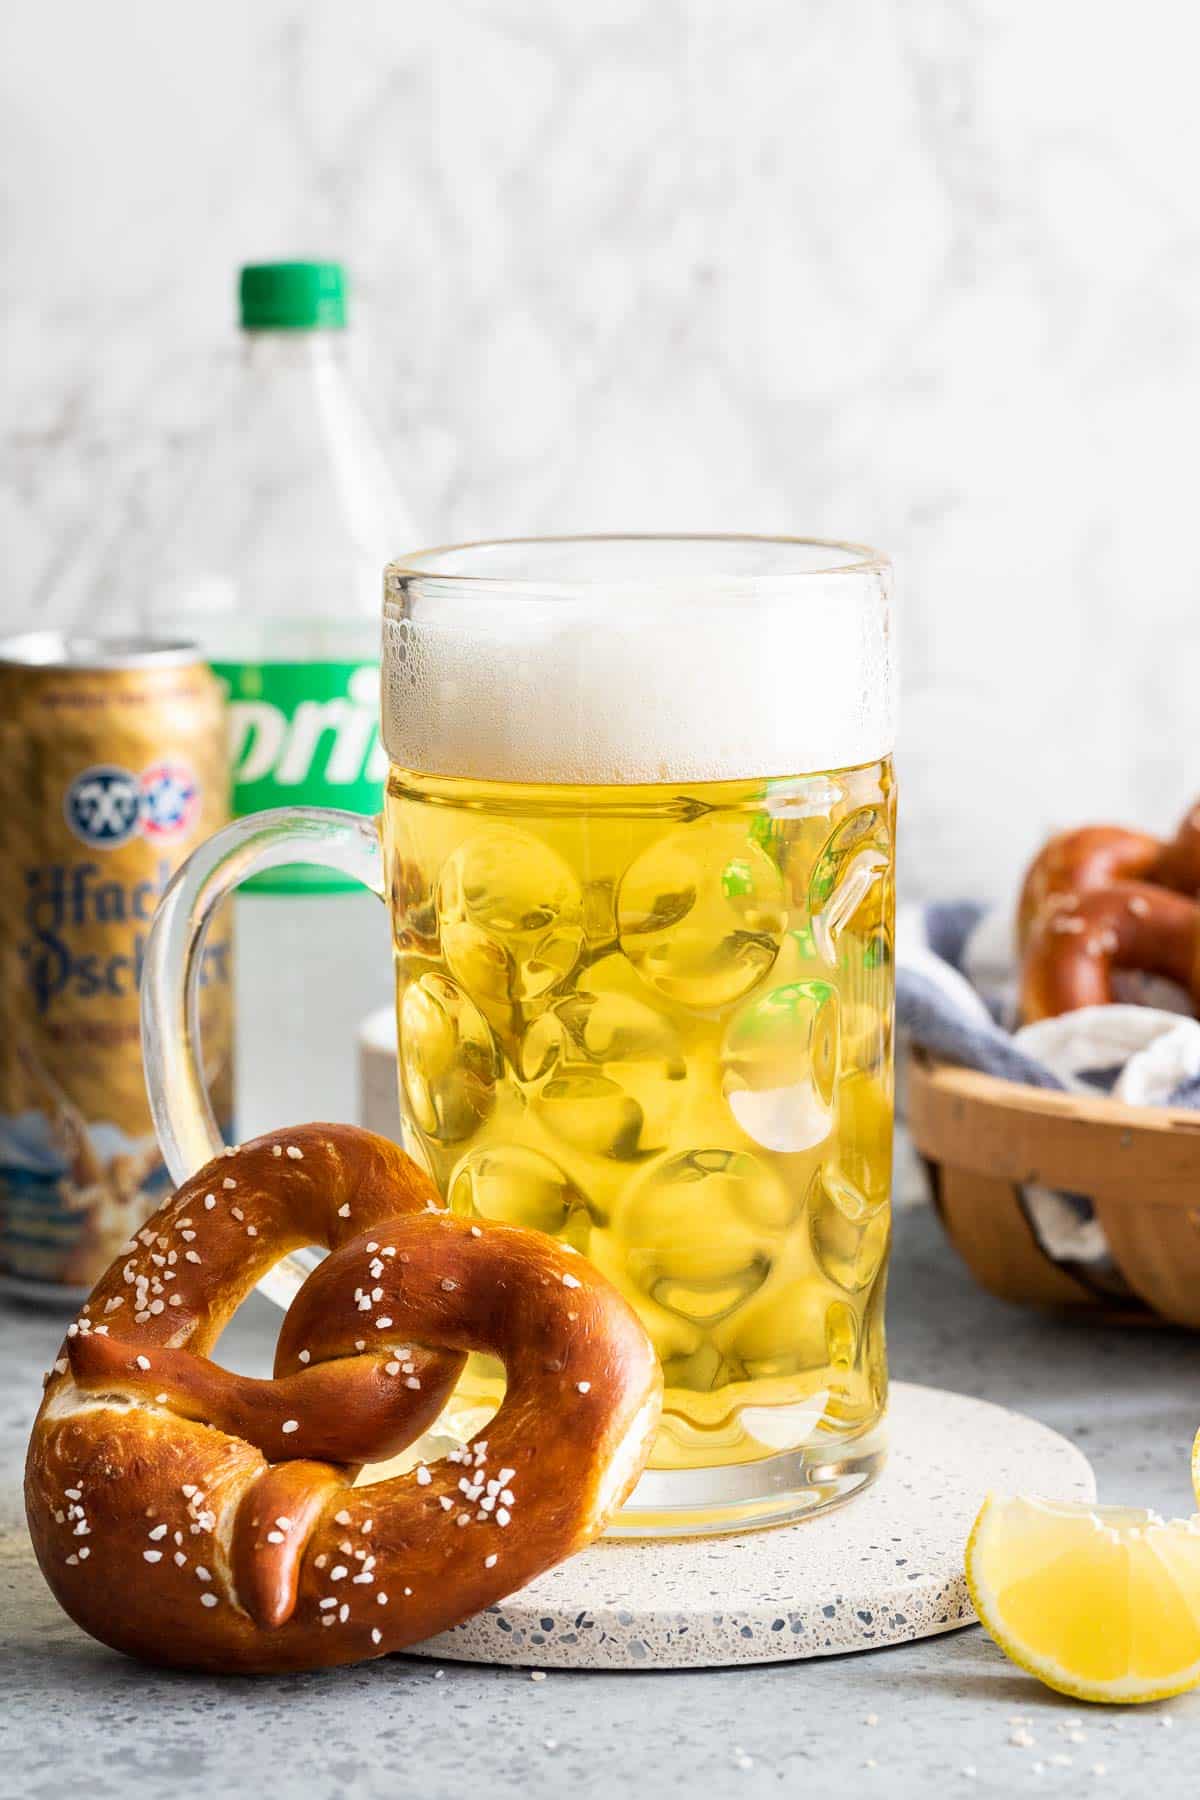 A pretzel leaning on a beer stein filled with Radler.